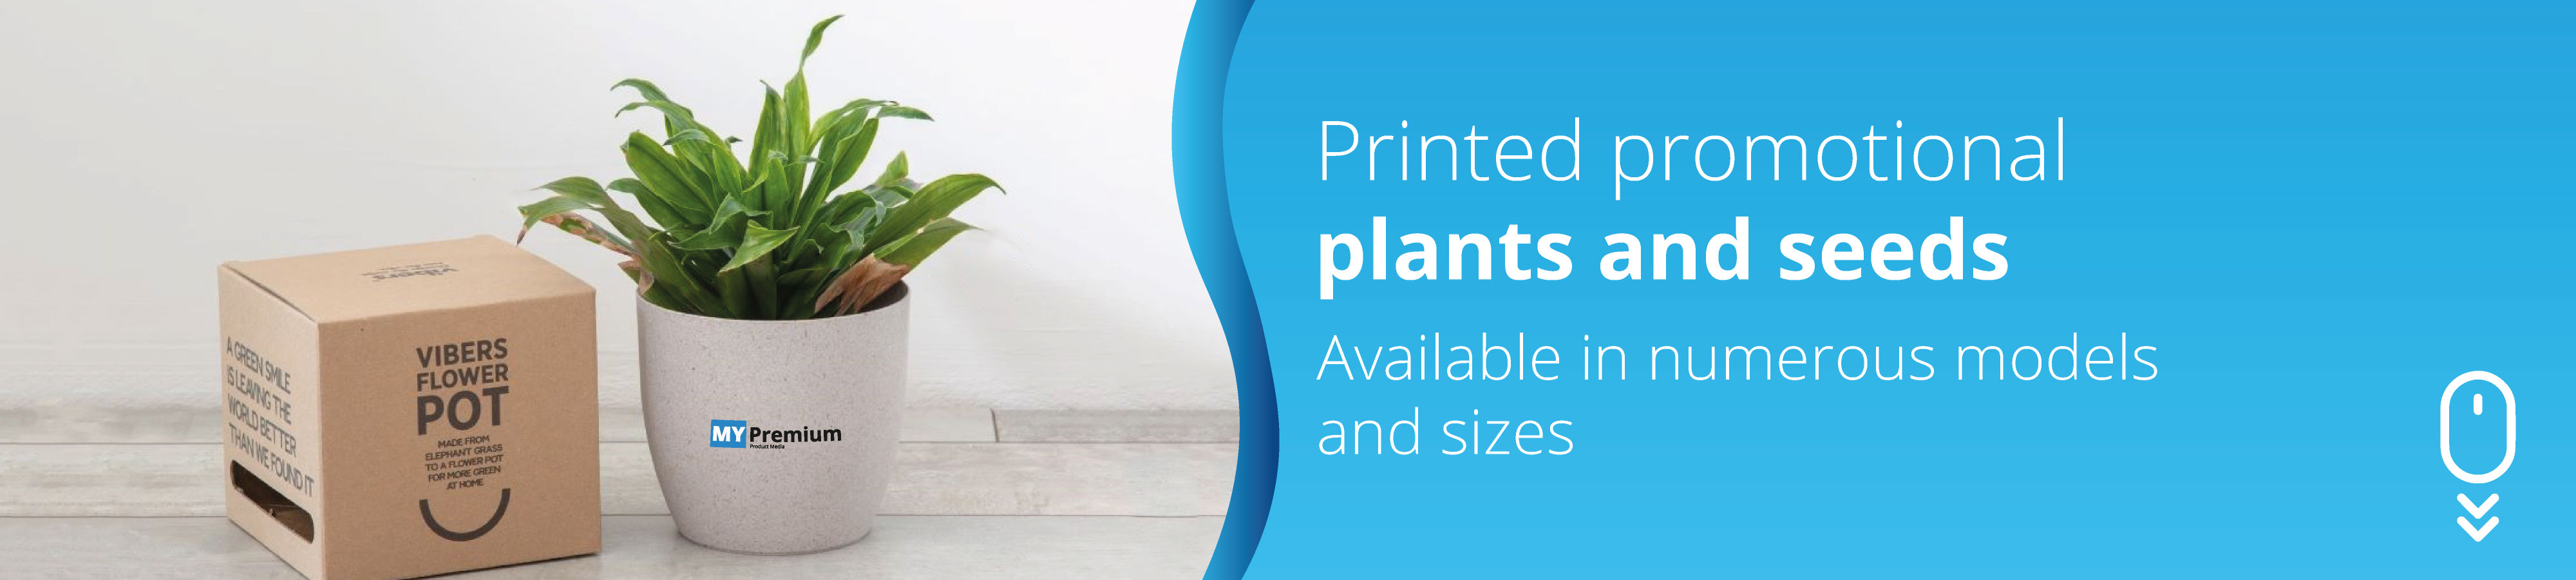 printed-promotional-plants-and-seedsvdXn81lbjI3tl